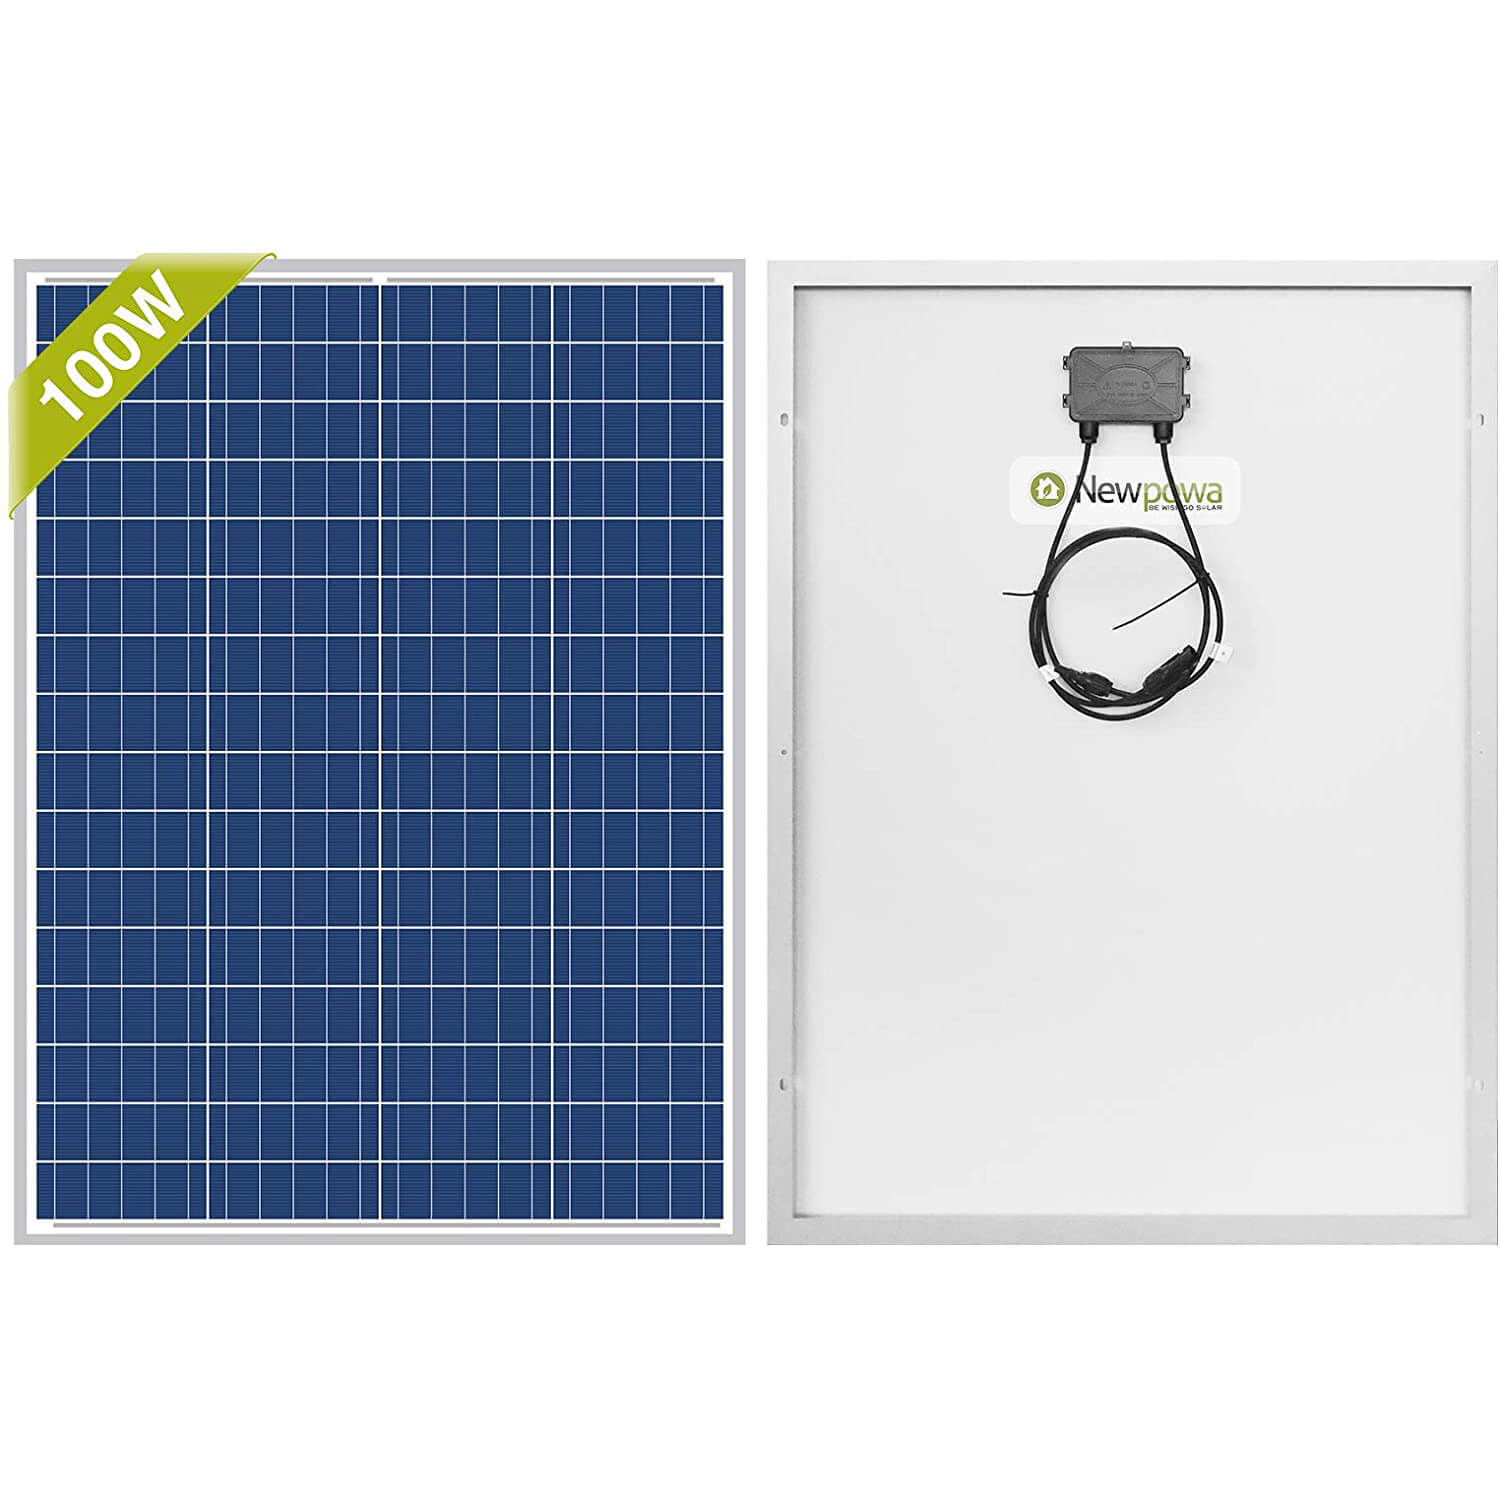 Newpowa 100 Watts 12 Volts Polycrystalline Photovoltaic PV Solar Panel